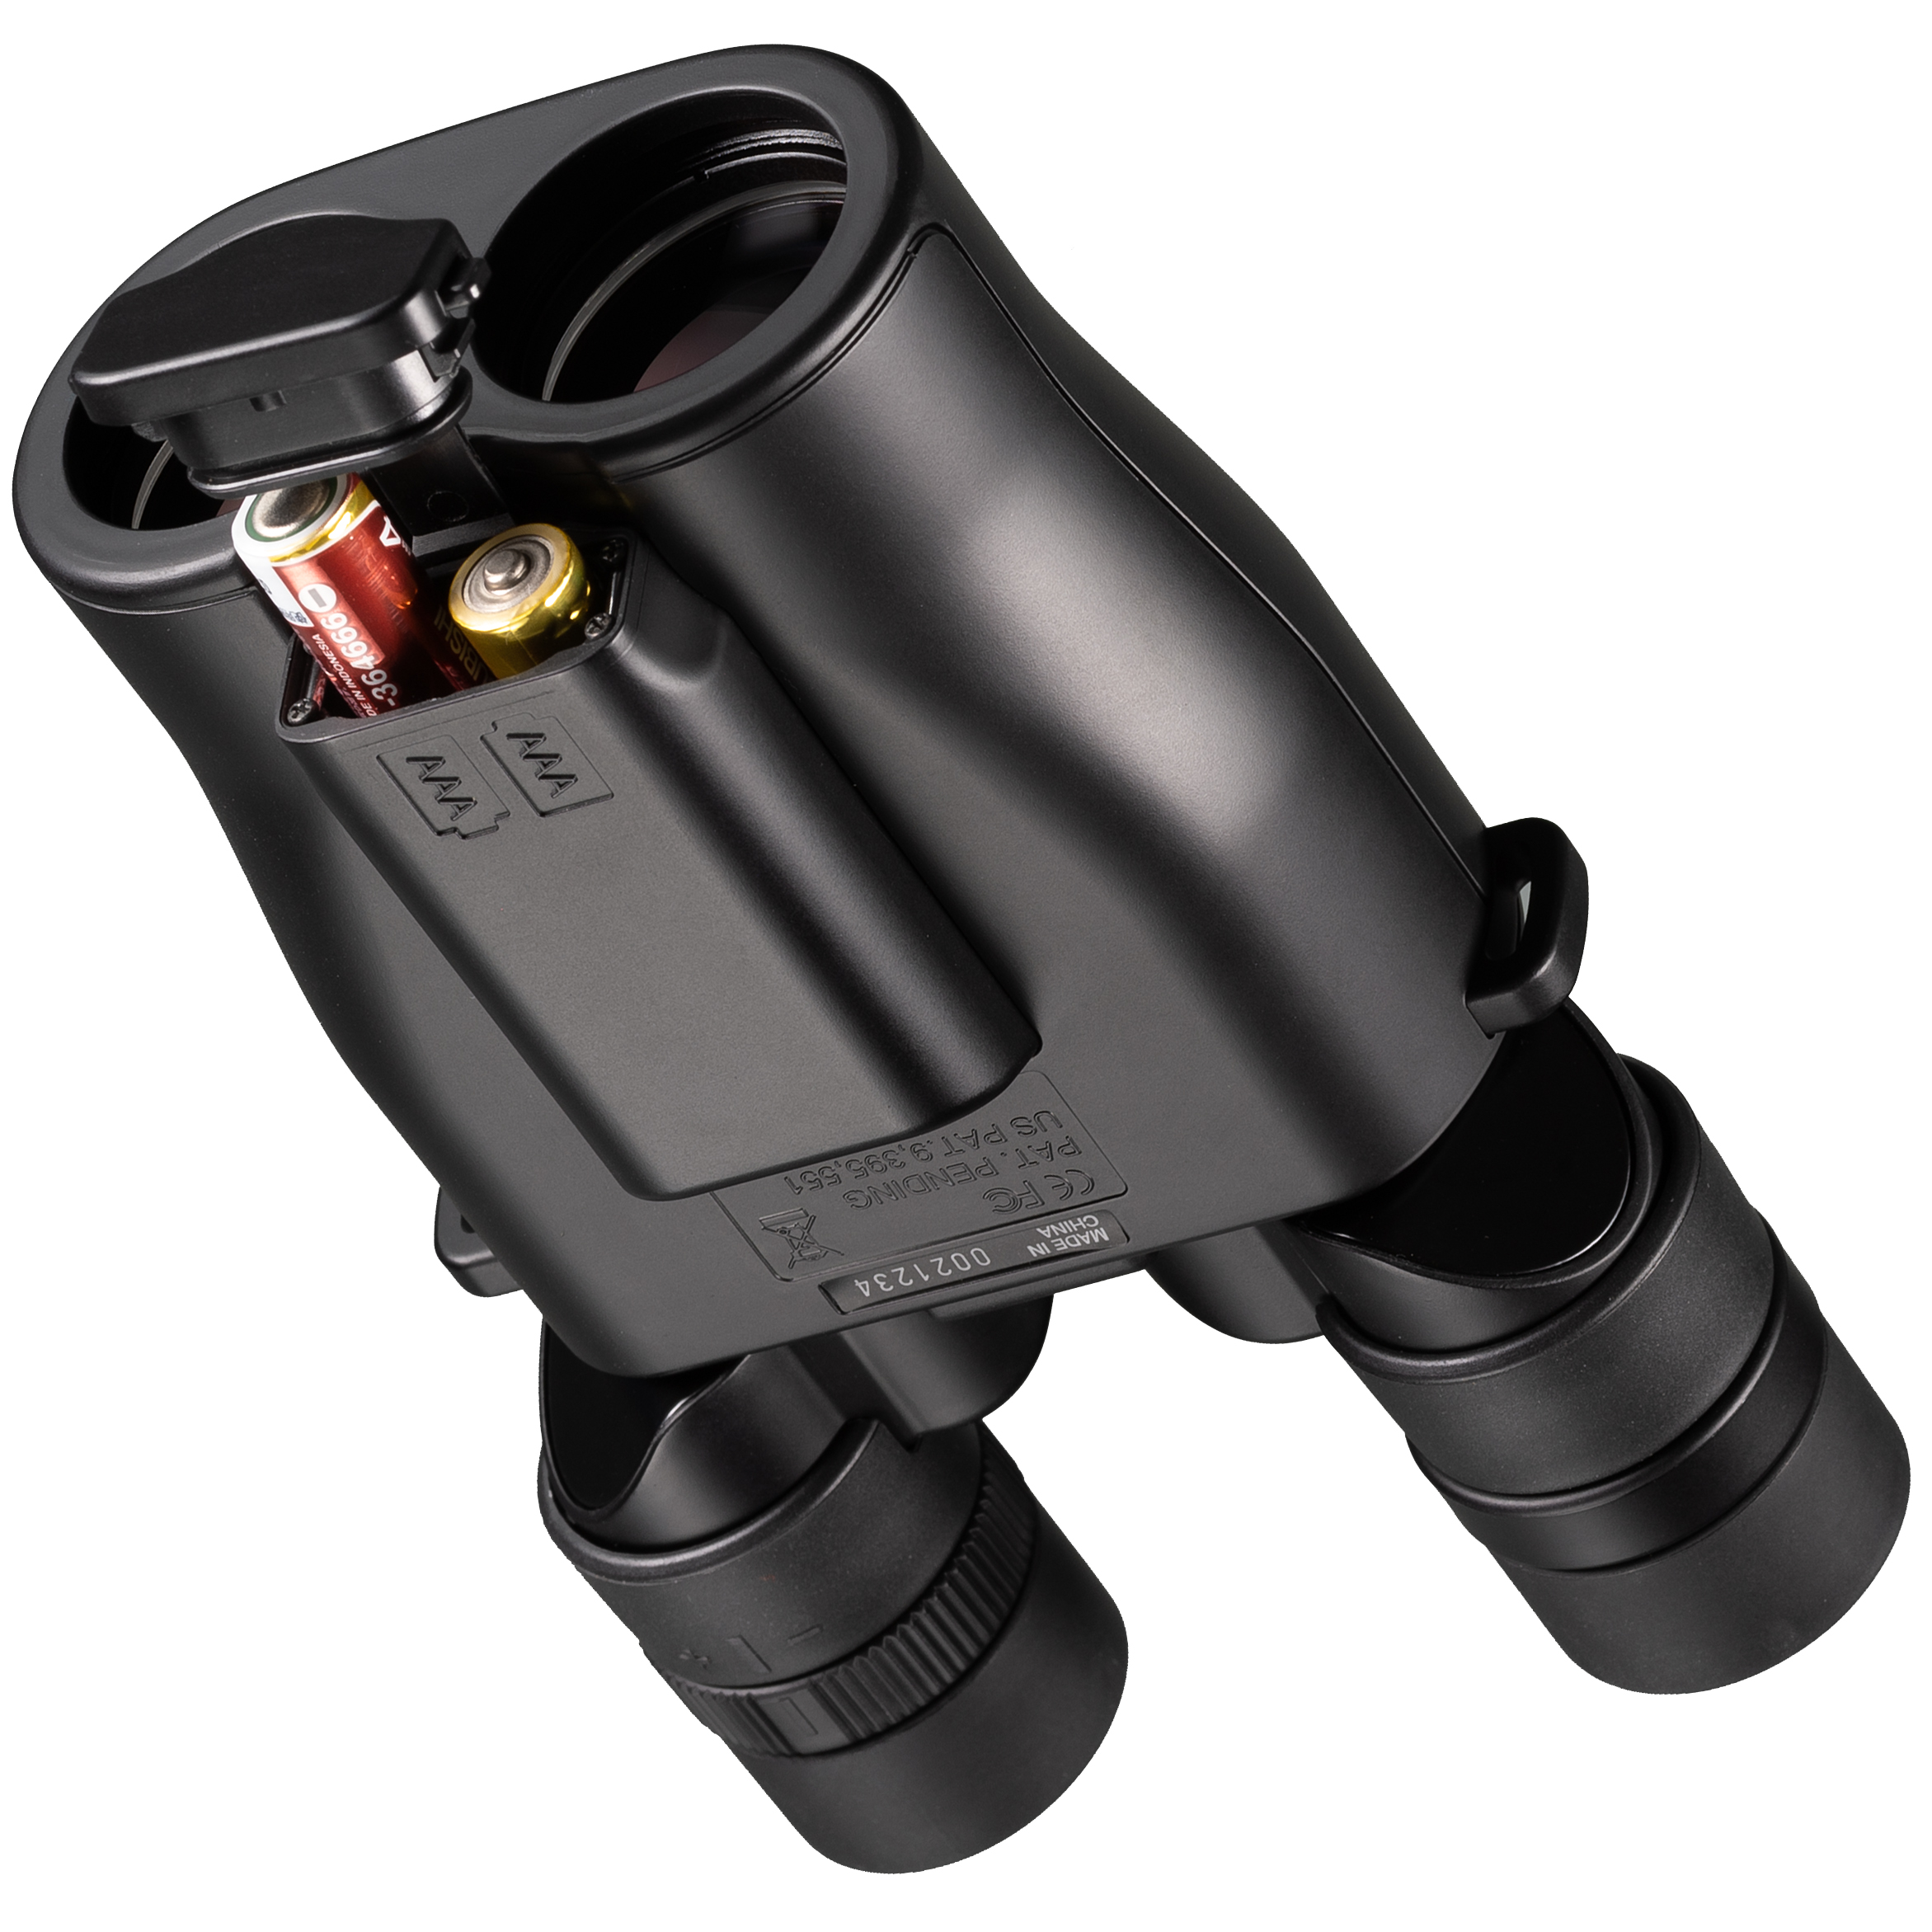 Vixen ATERA H12x30 Binocular with stabilizer, black